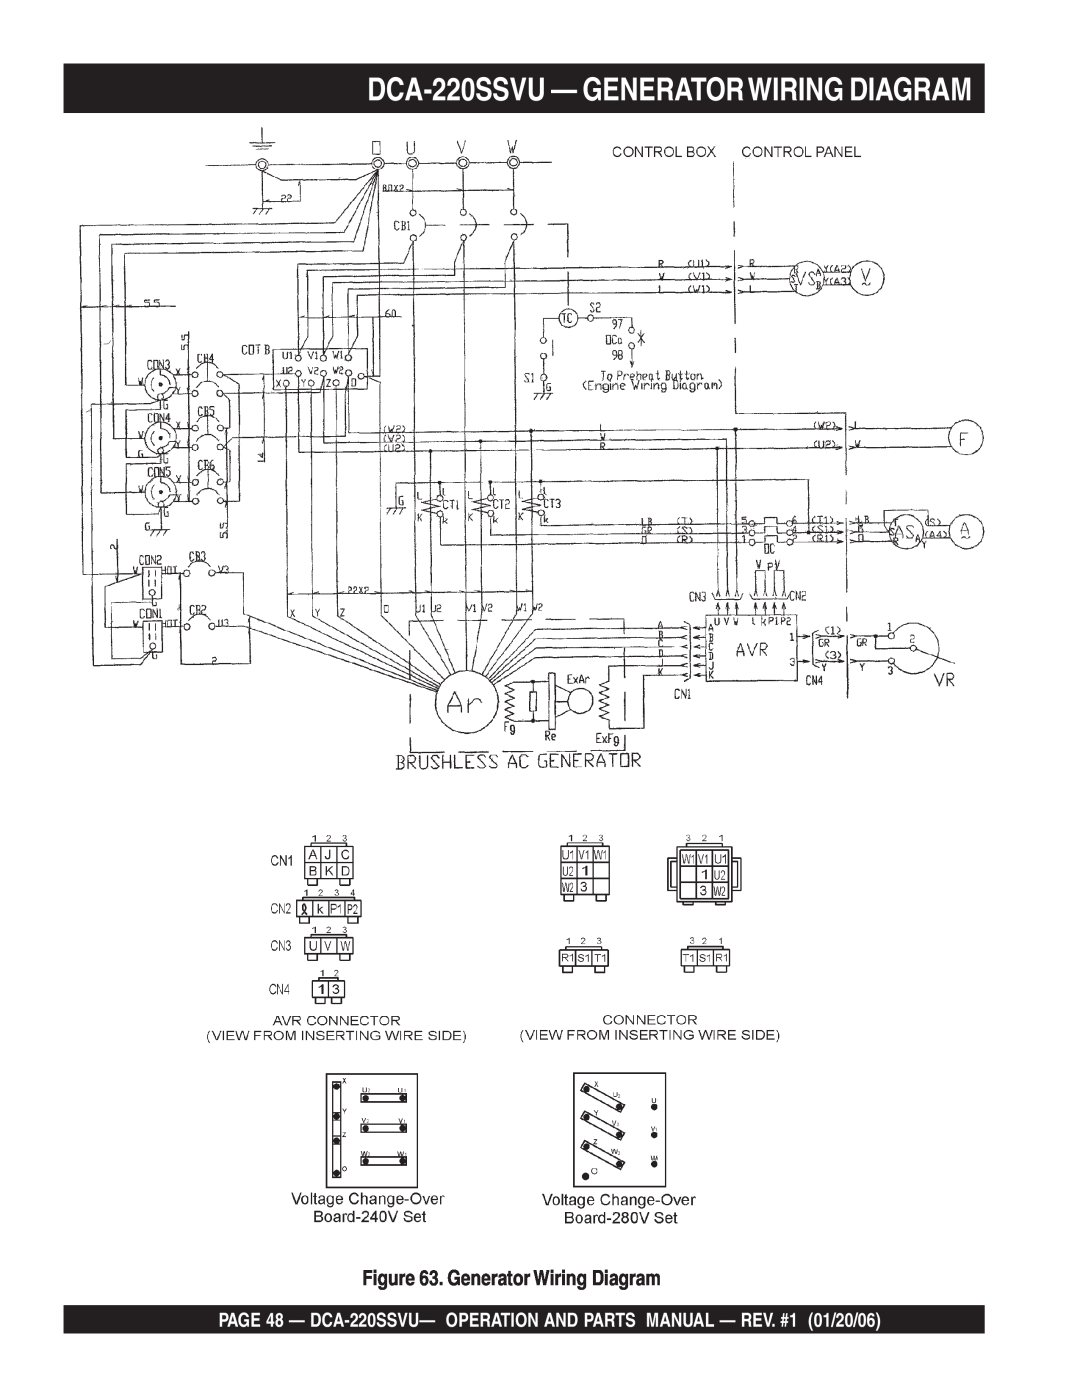 Multiquip operation manual DCA-220SSVU— GENERATORWIRING DIAGRAM, Generator Wiring Diagram 